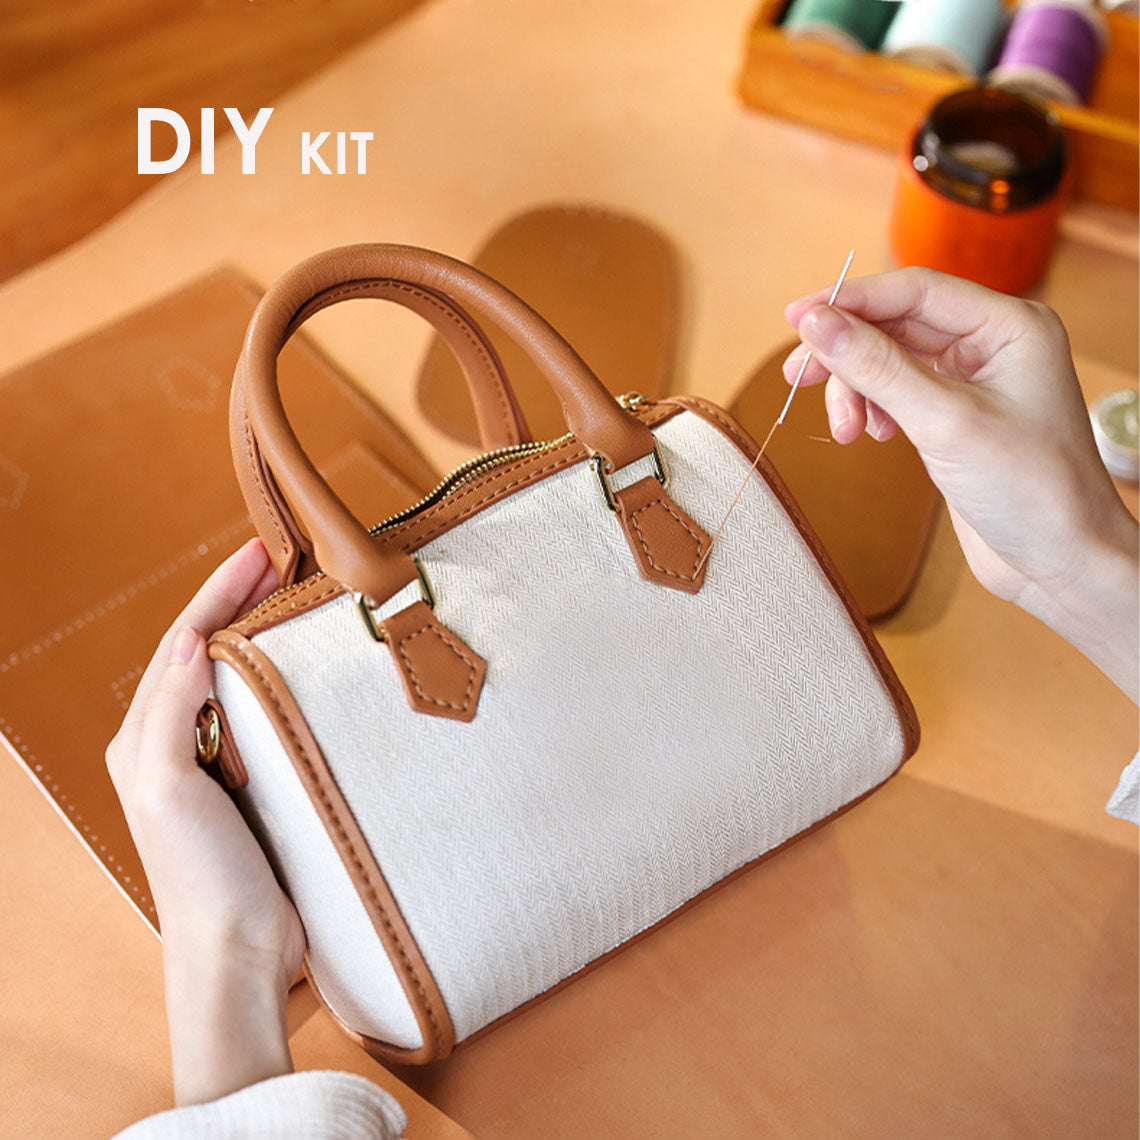 Leather bag kits to sew | How to make handbag at home with cloth